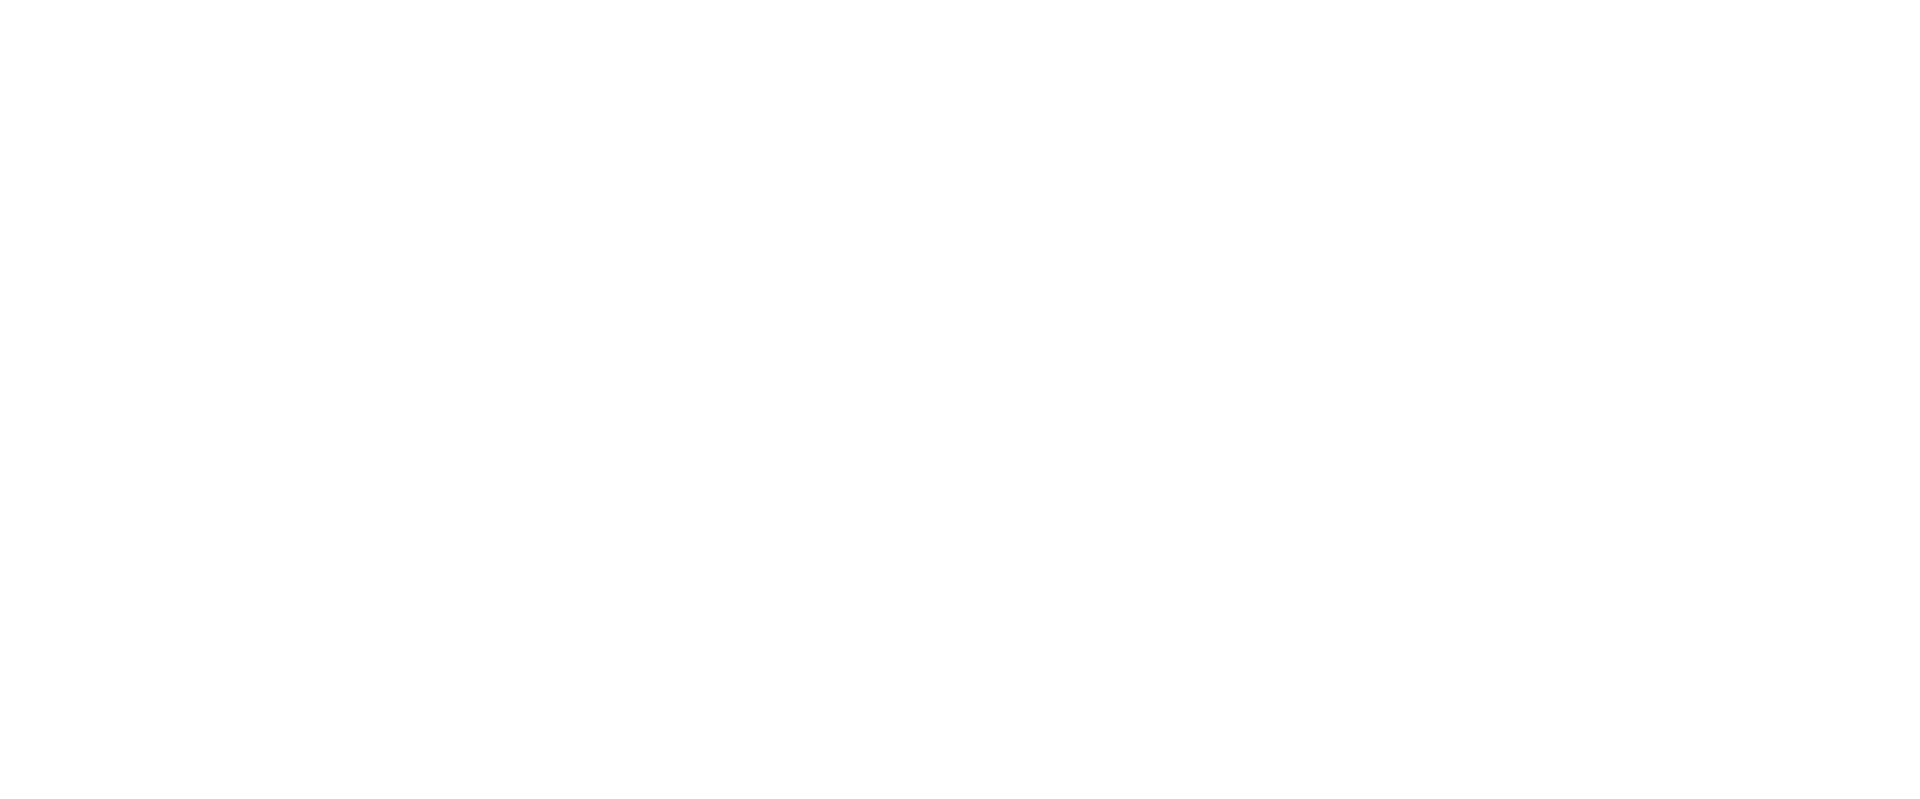 Pointe Grand Spartanburg white logo.